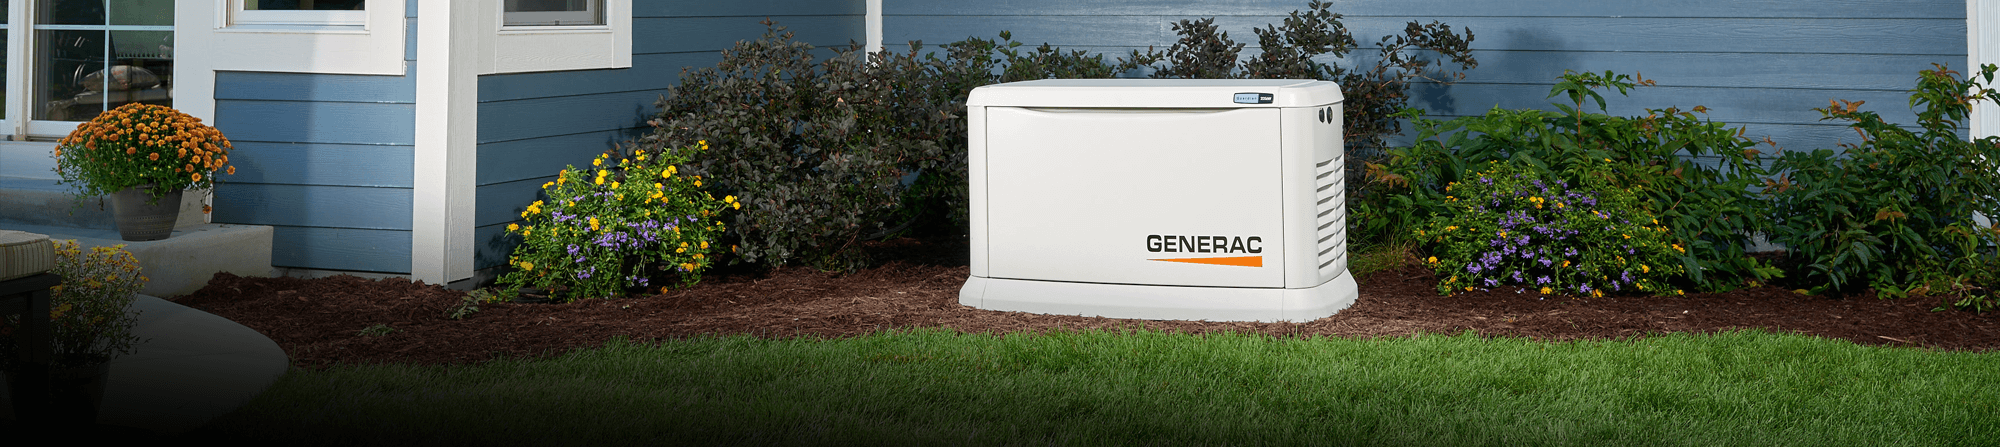 Generac Home Generator Installers in Southeast Wisconsin